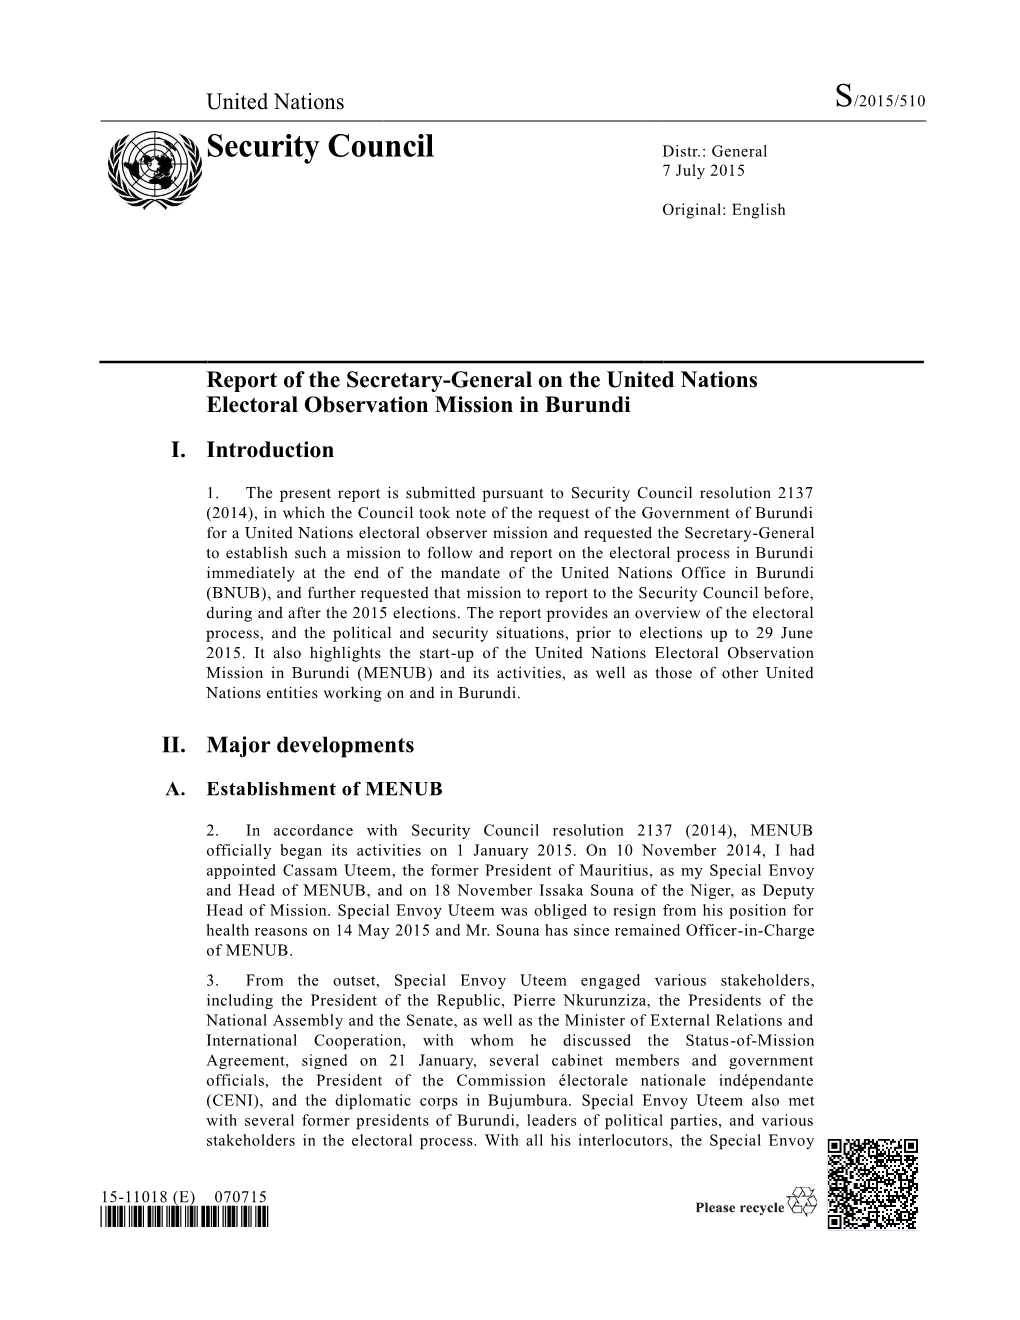 Security Council Distr.: General 7 July 2015